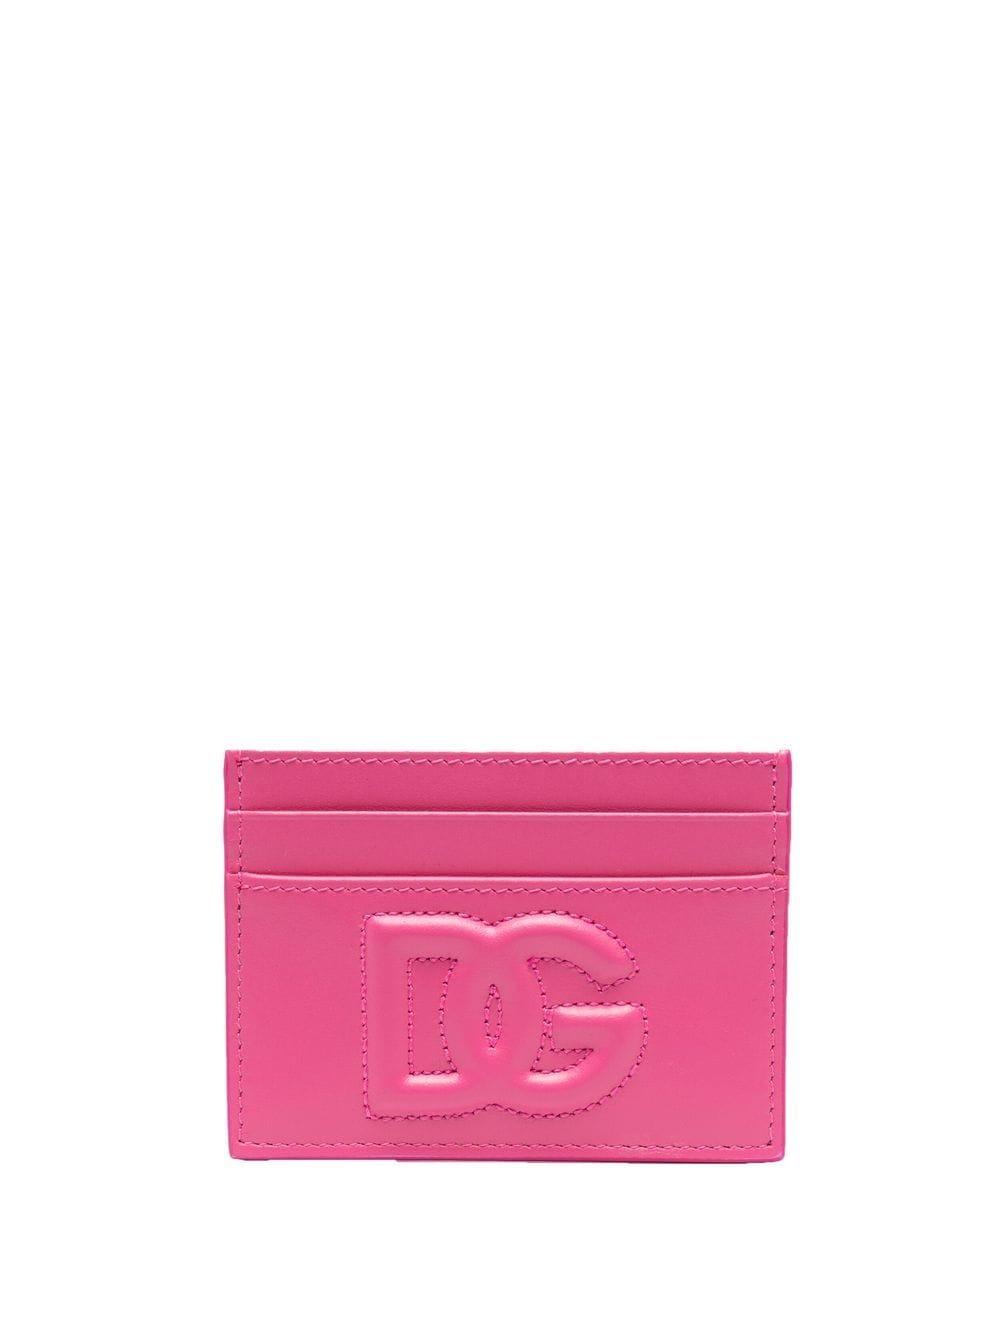 Dolce & Gabbana Dg Logo Leather Card Holder in Pink